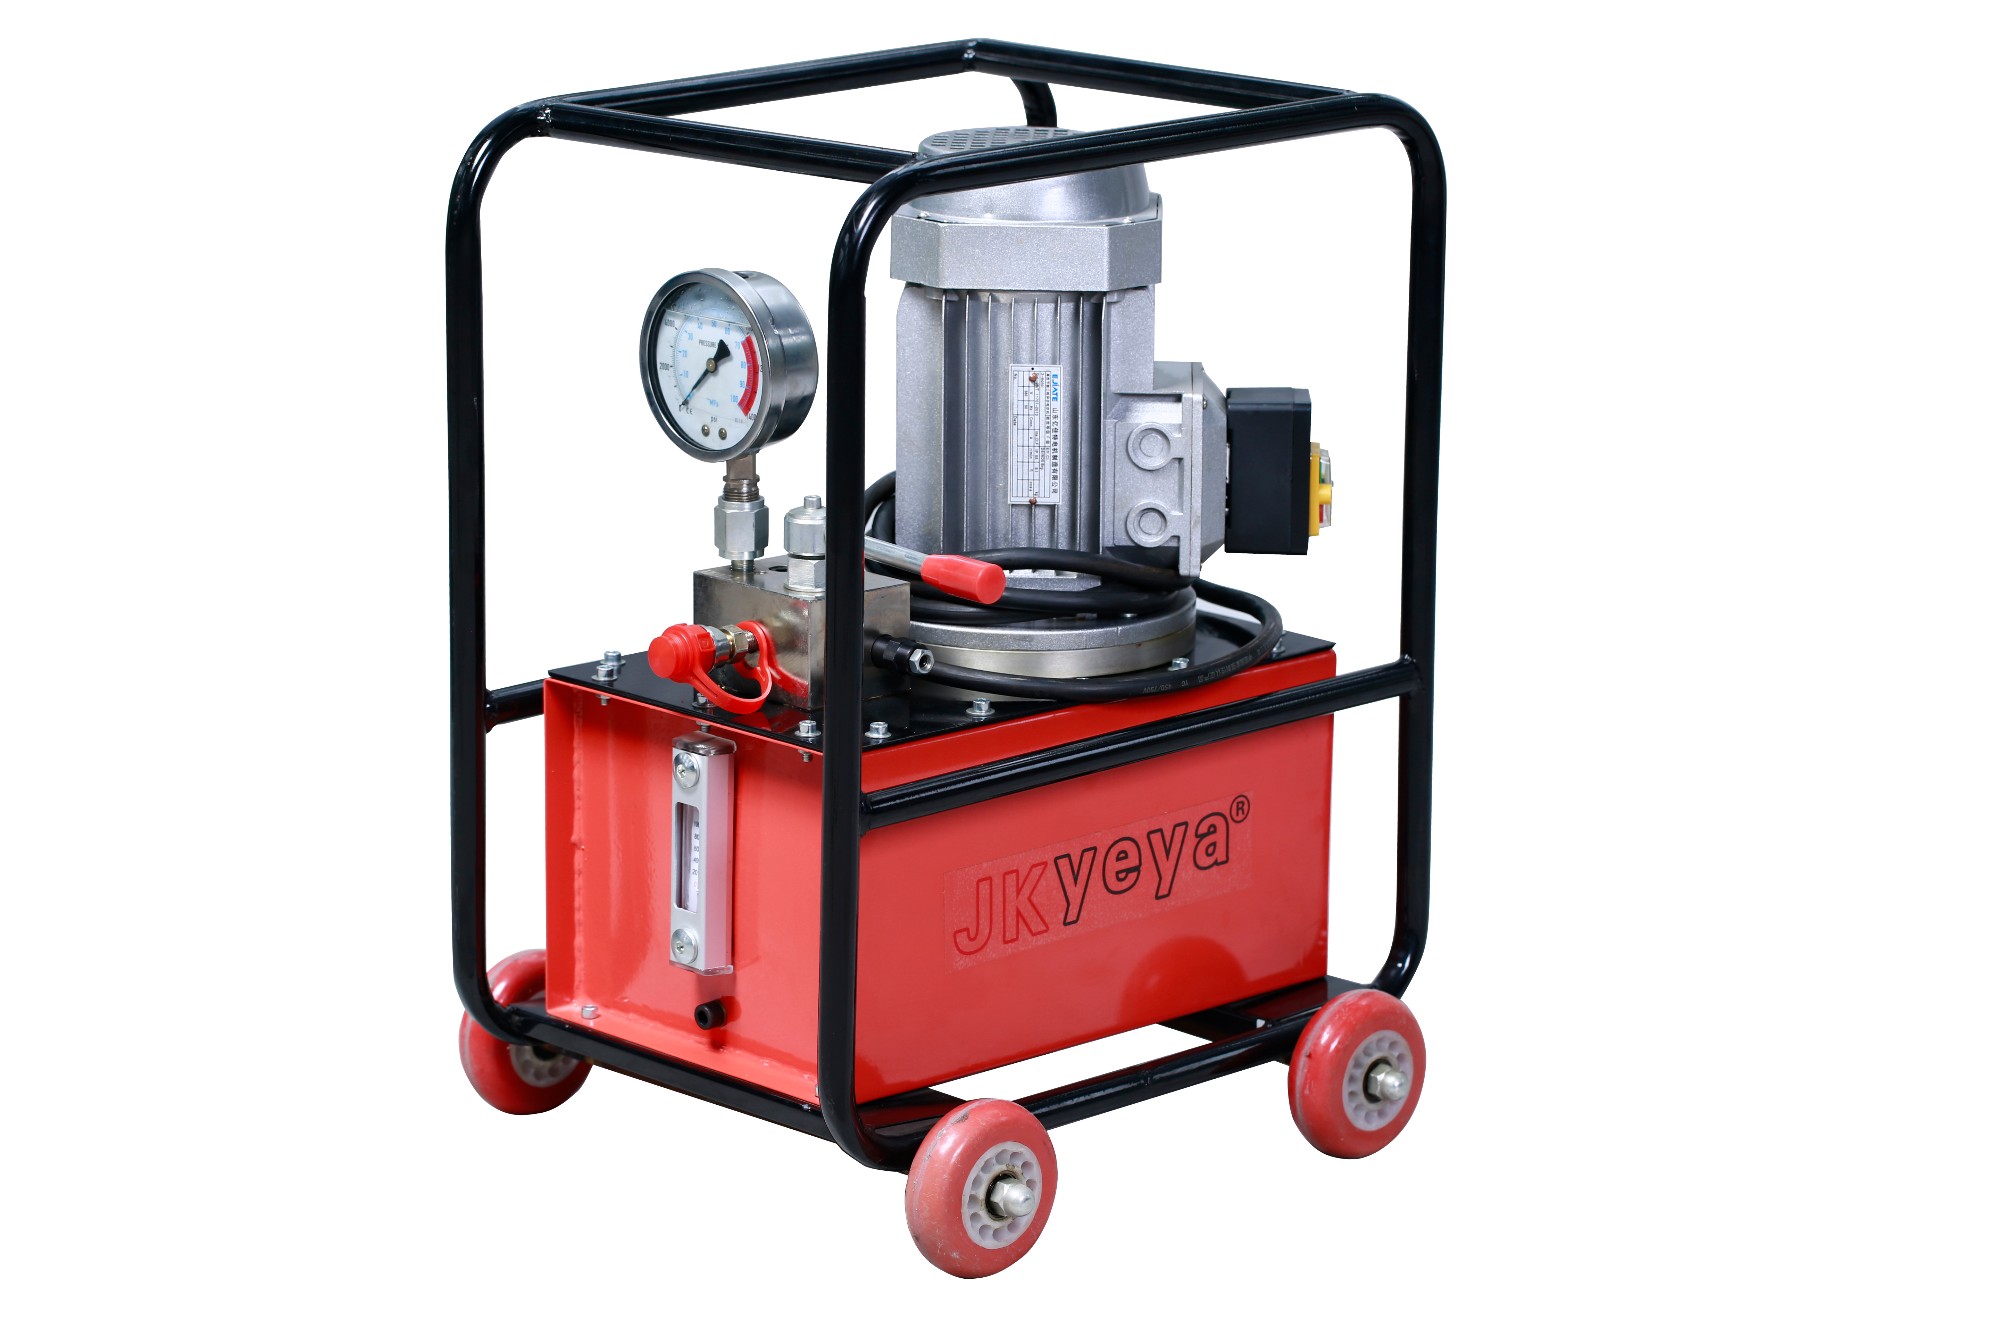 Low Pressure Hydraulic Cylinder, Flange Separator, Flange Separator Tools